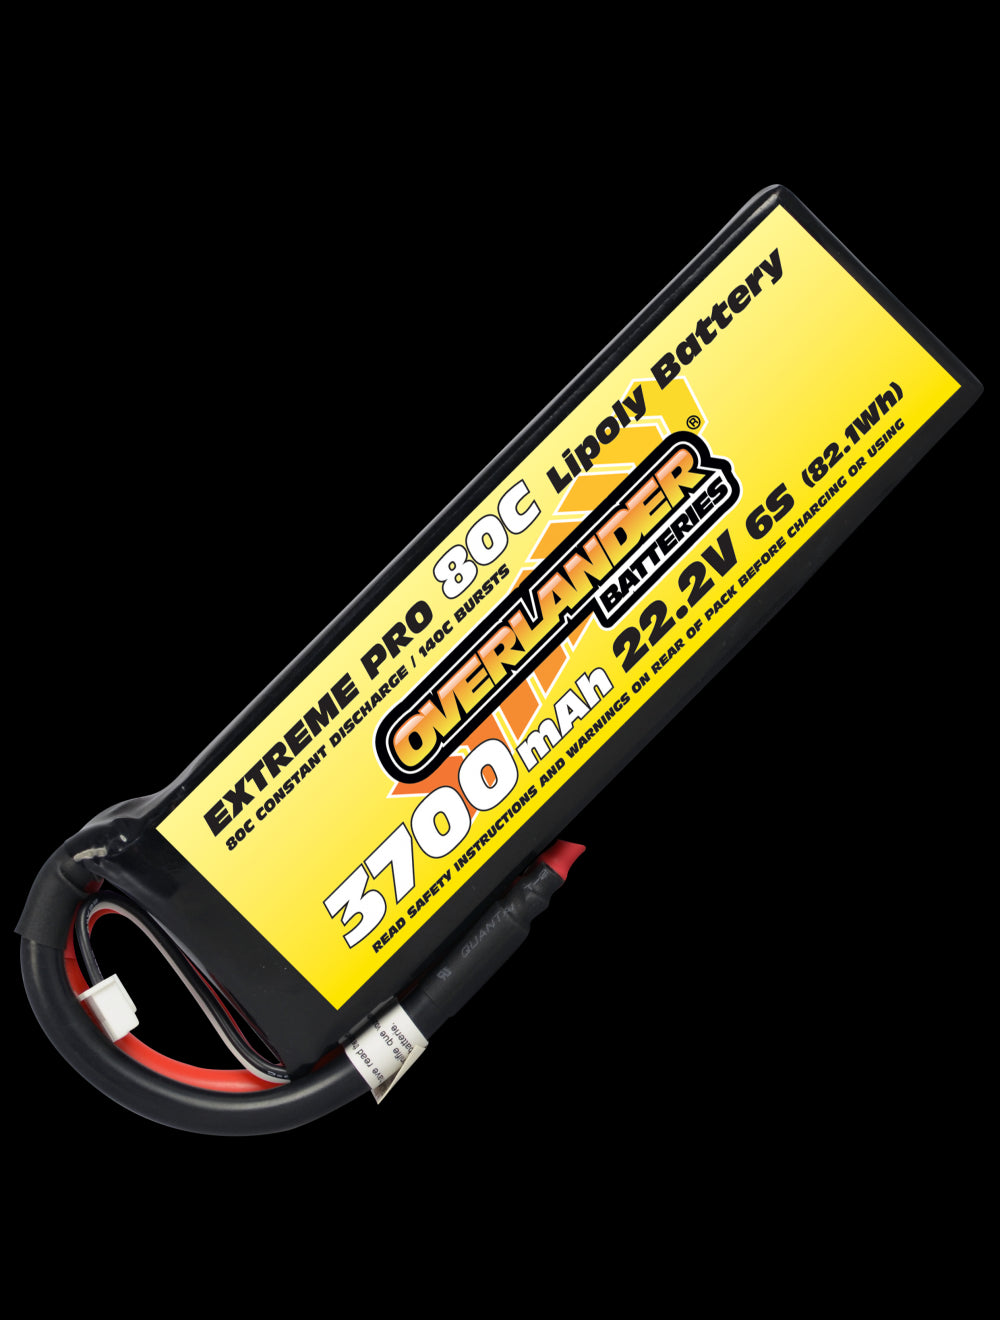 Overlander 3700mAh 22.2V 6S 80C Extreme Pro LiPo Battery - EC5 Connector 2900